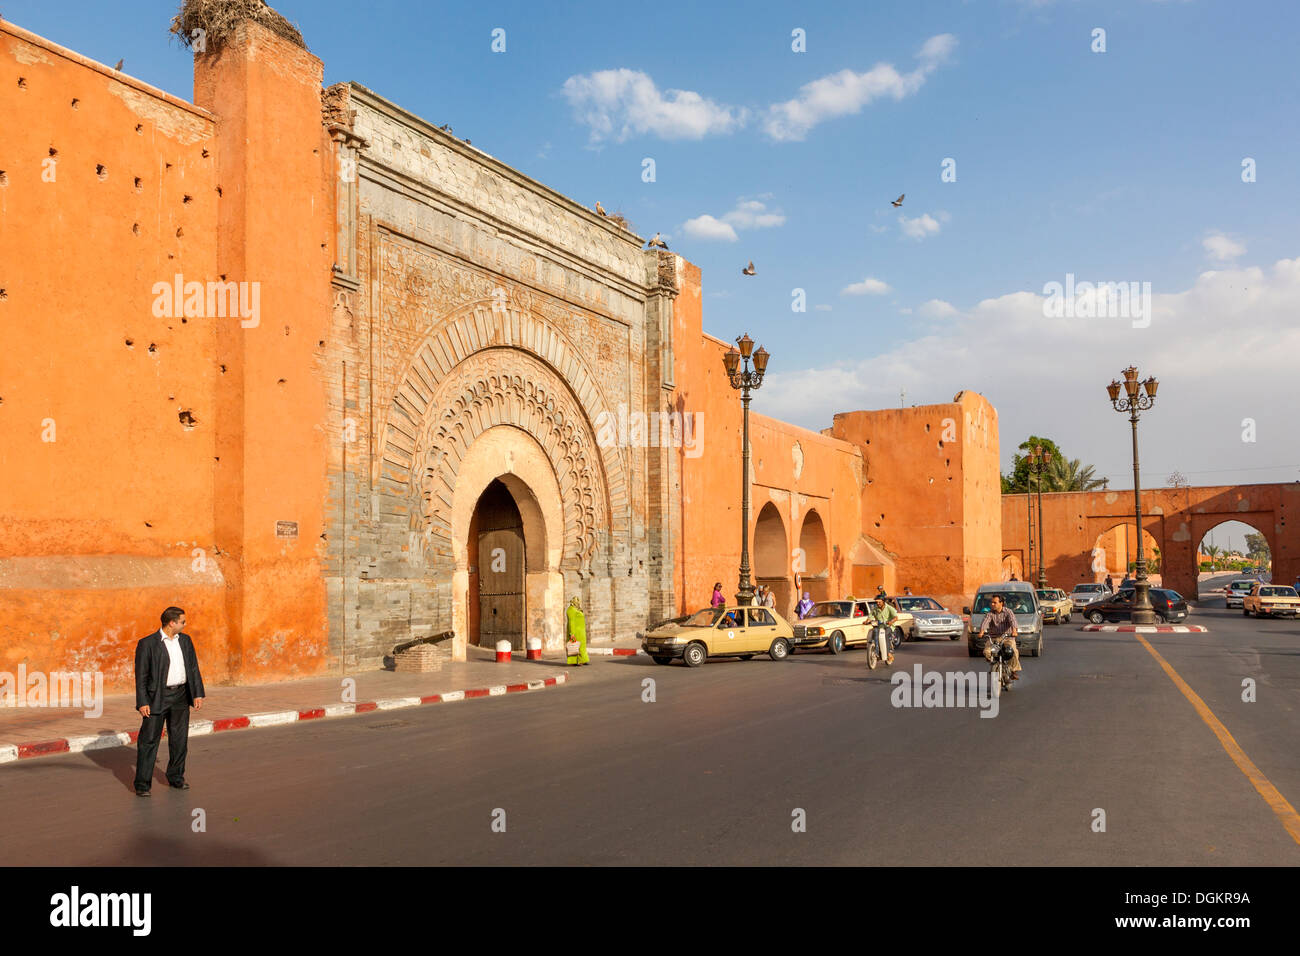 The Bab Agnaou city gate in Marrakesh. Stock Photo